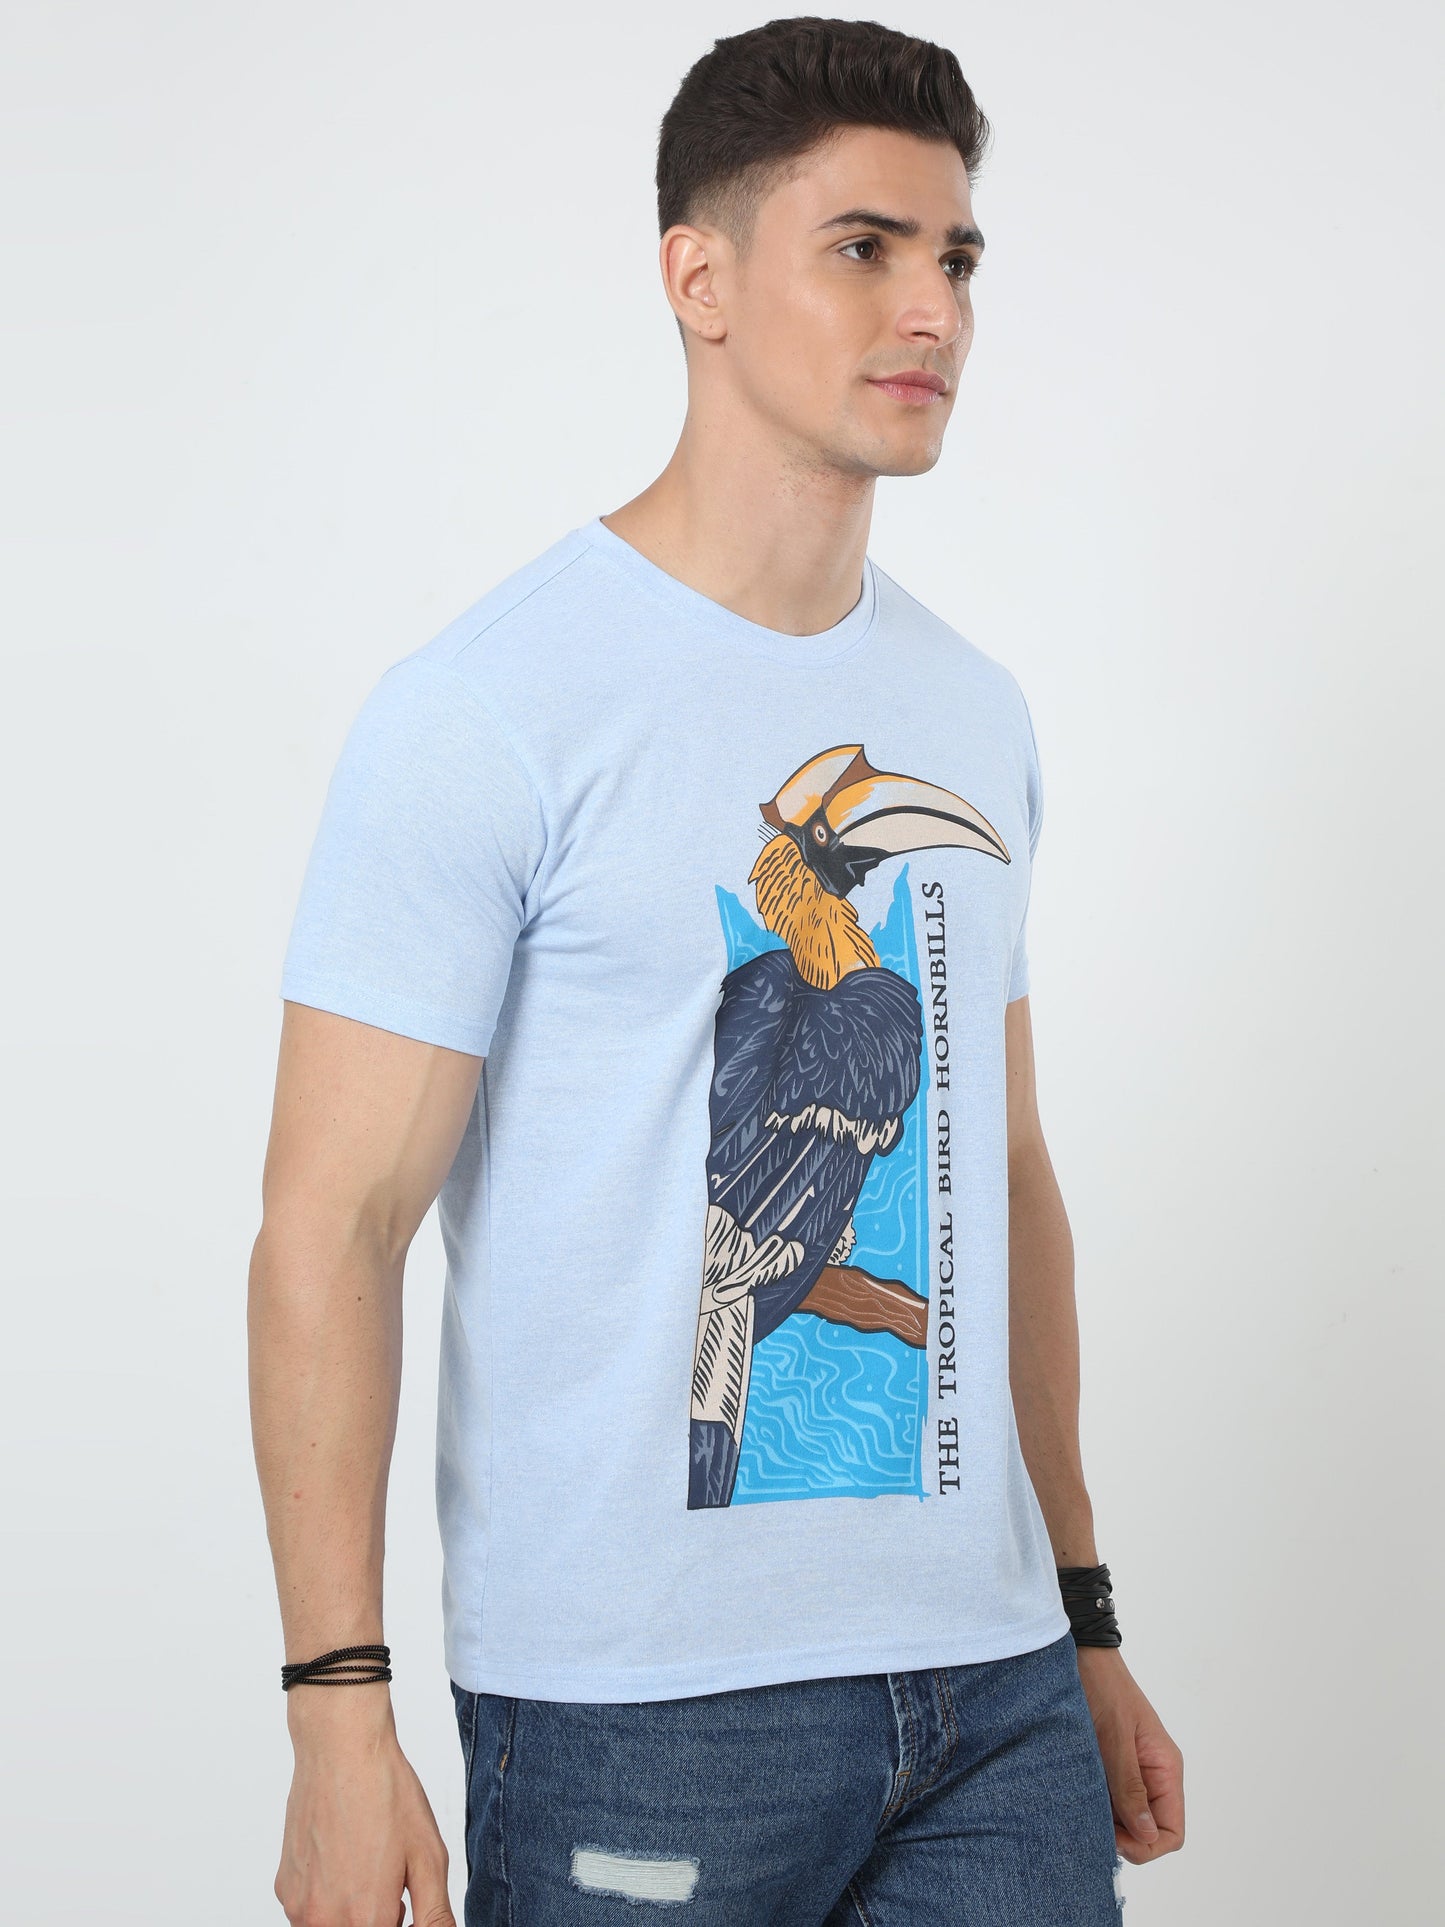 Woodpecker Men's casual cotton T-Shirt Blue